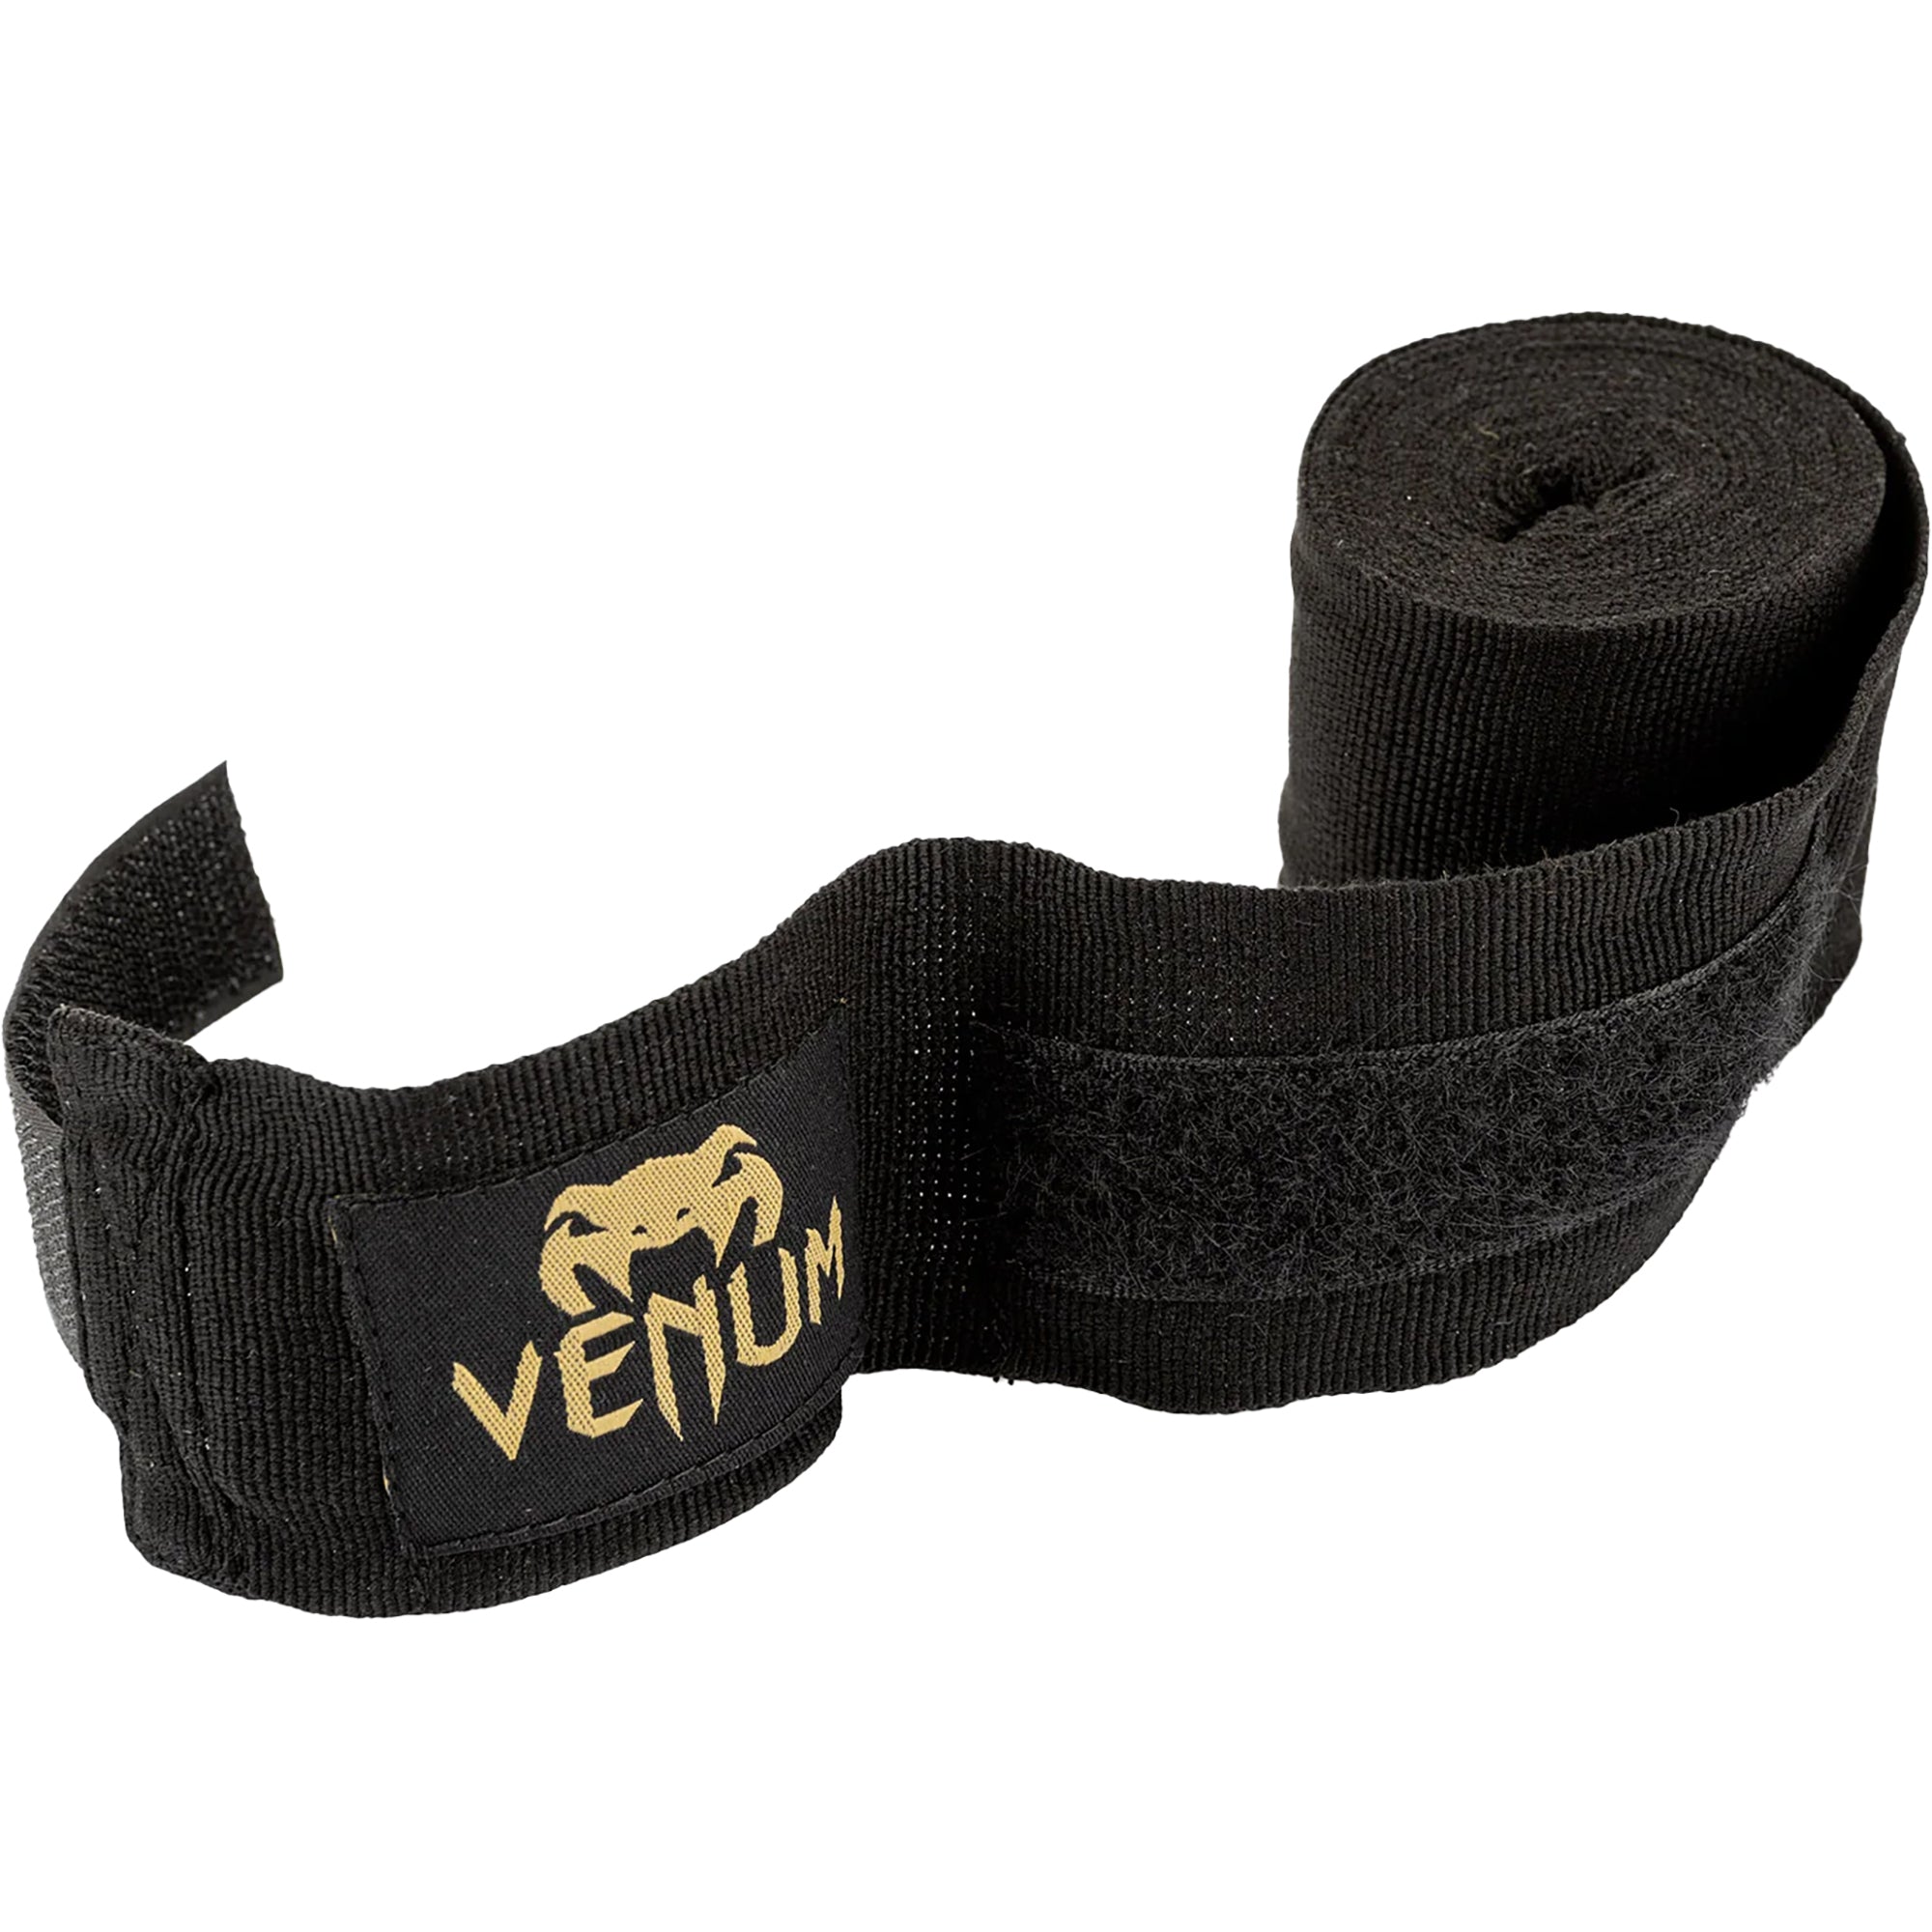 Venum Kontact 4m Boxing Handwraps - Black/Gold Venum